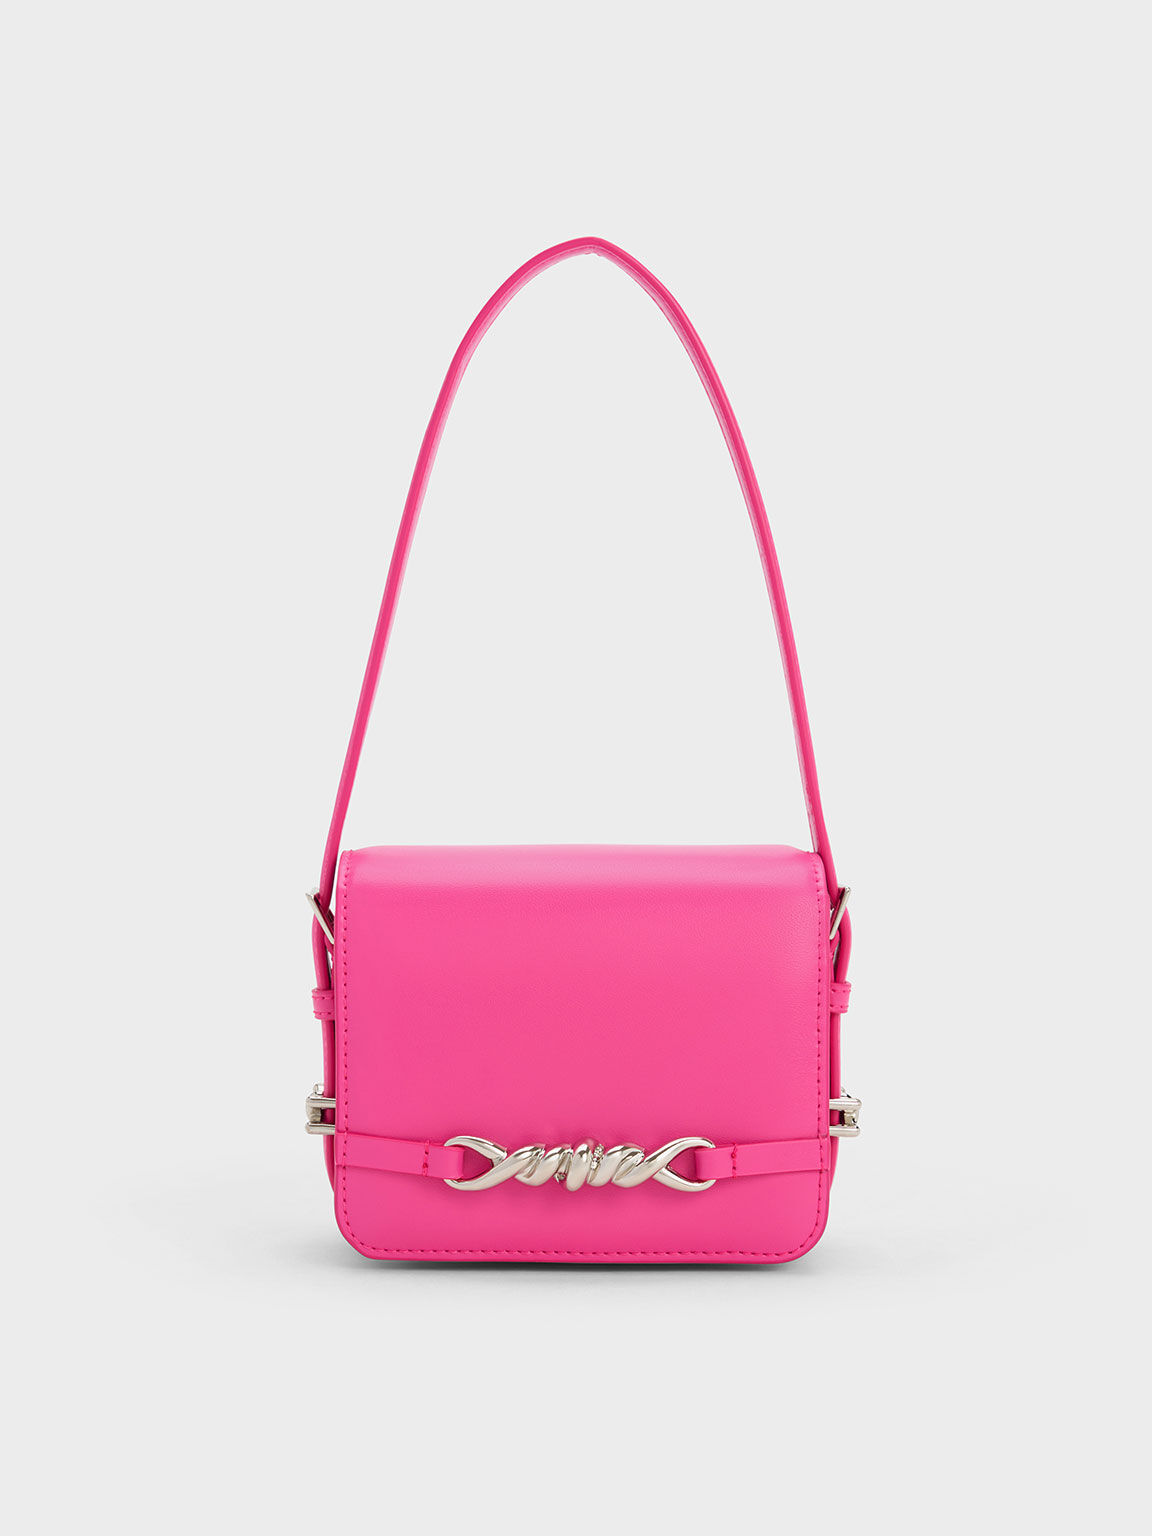 GB Girls Quilted Chain Crossbody Handbag - Pink